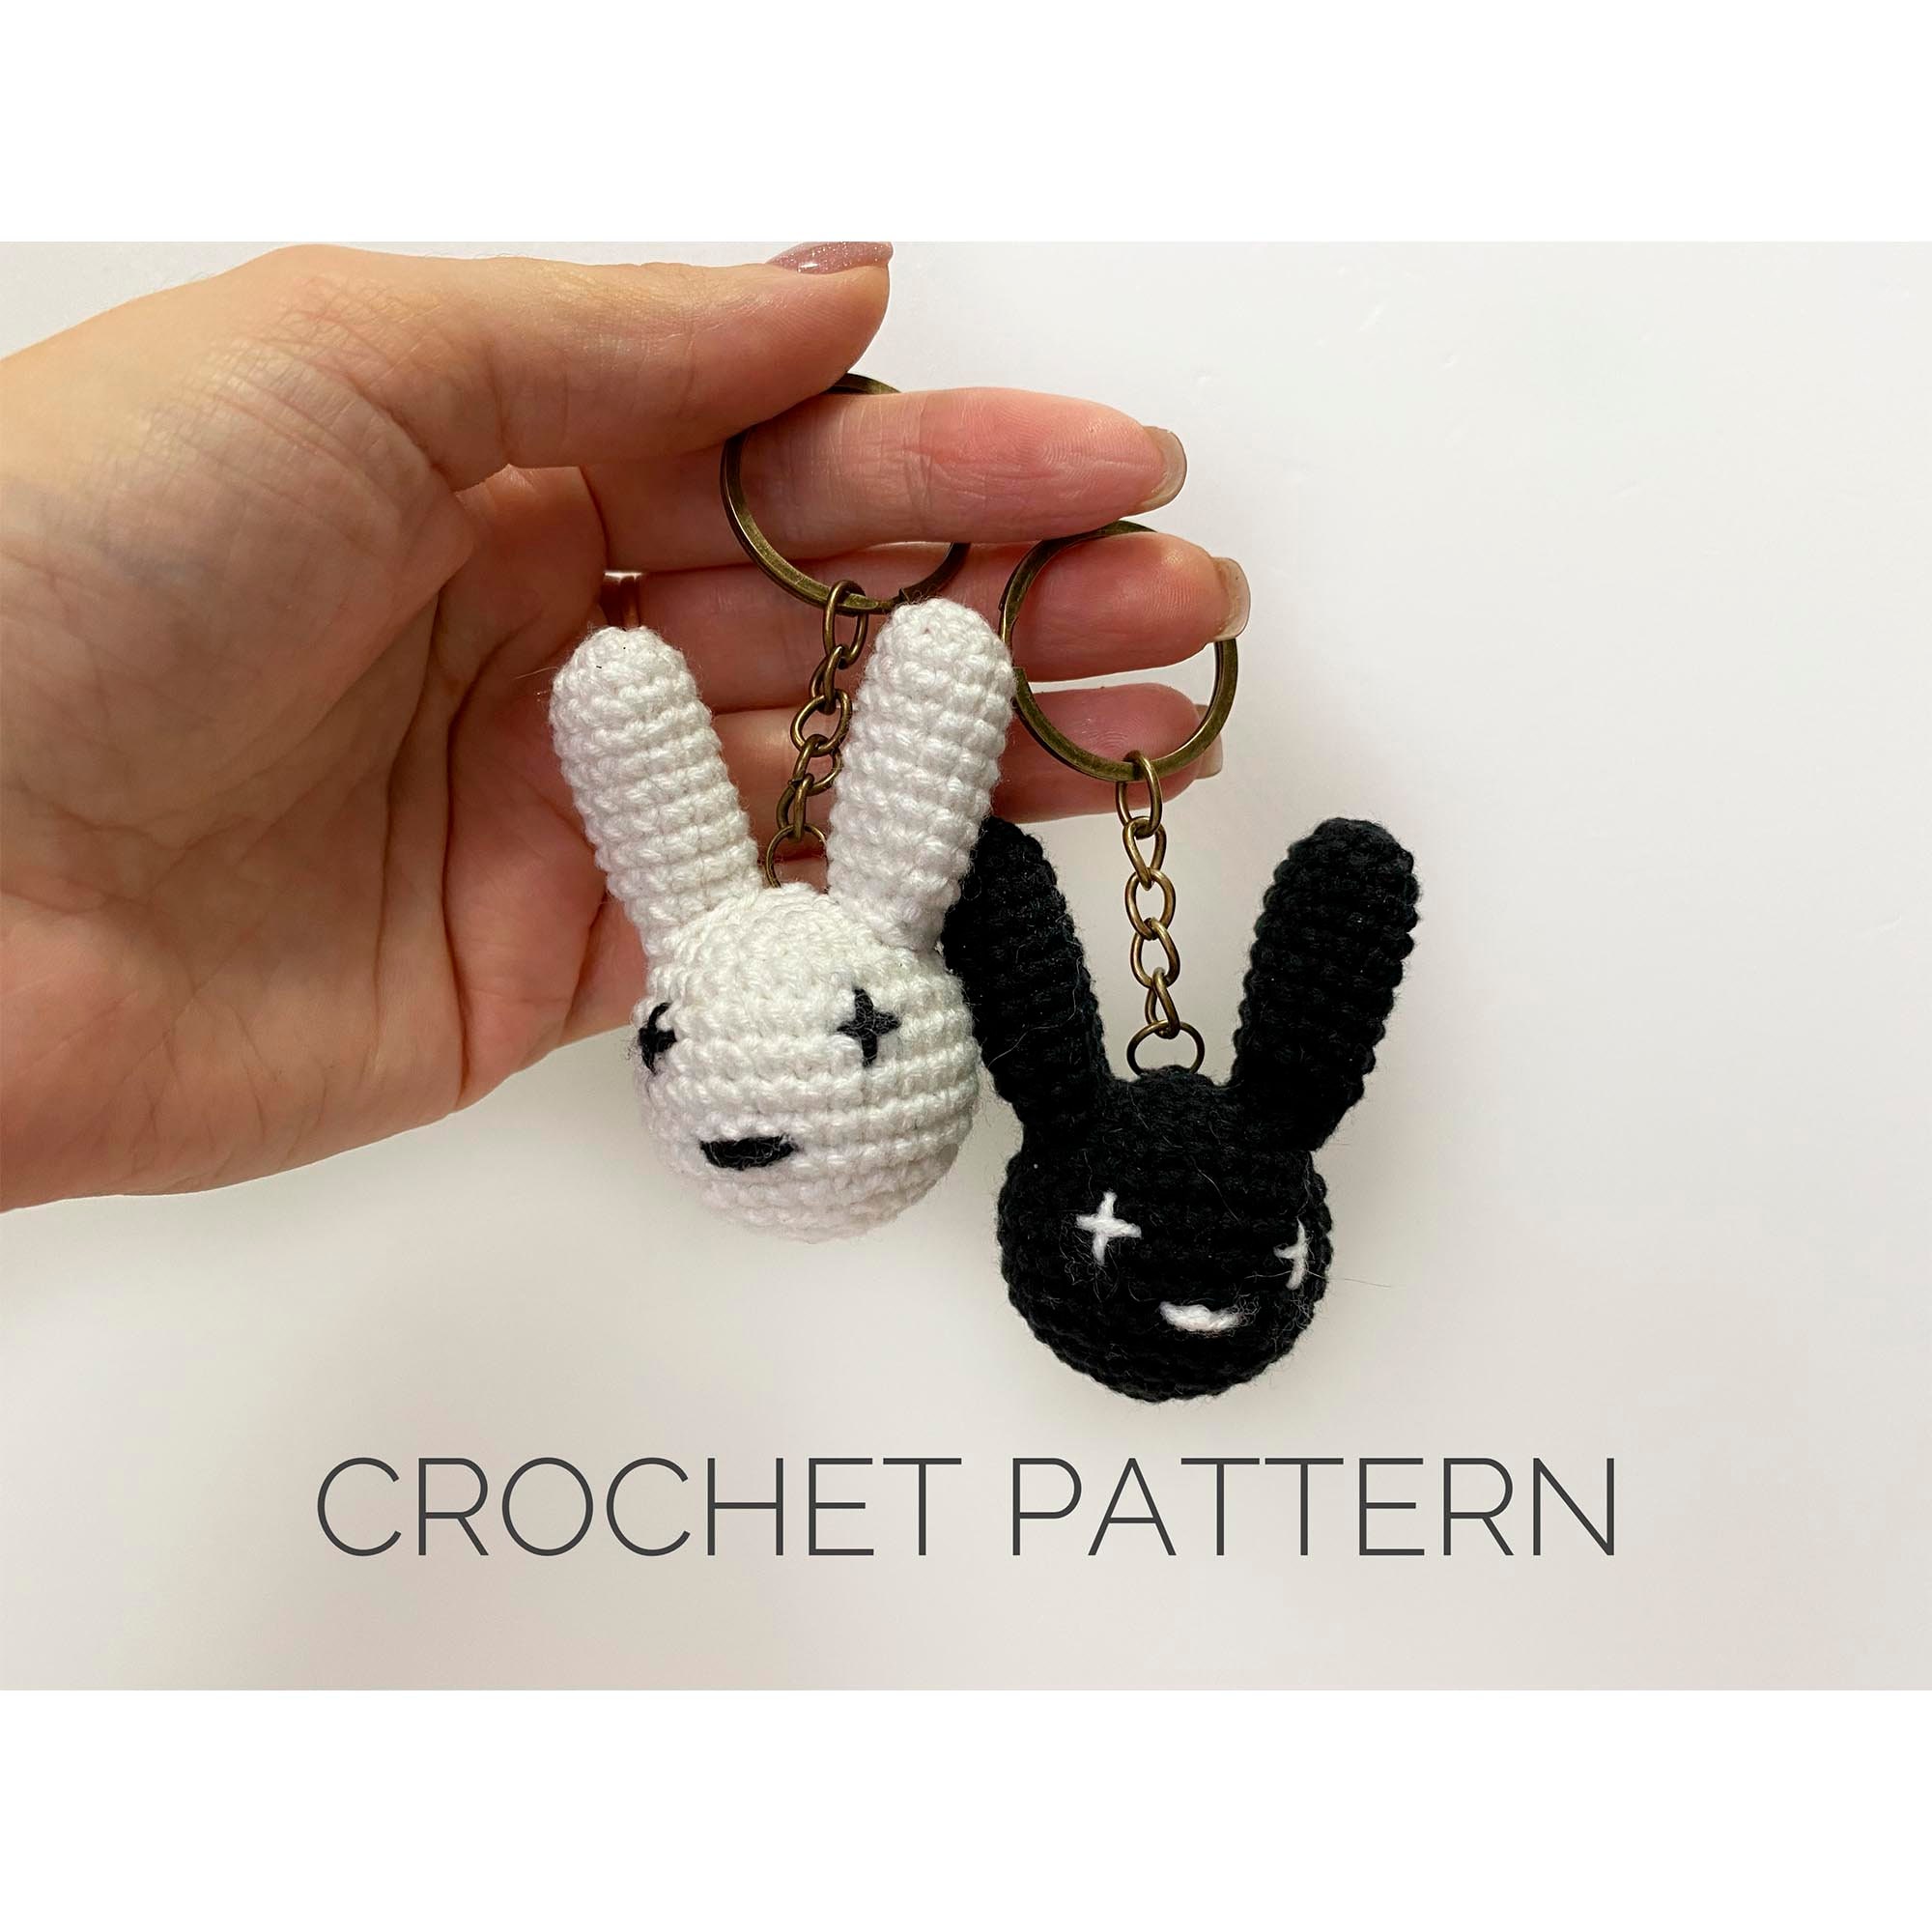 yiseven stuffed bunny keychain toy - soft and fuzzy large stitch plush  rabbit fur key chain - cute